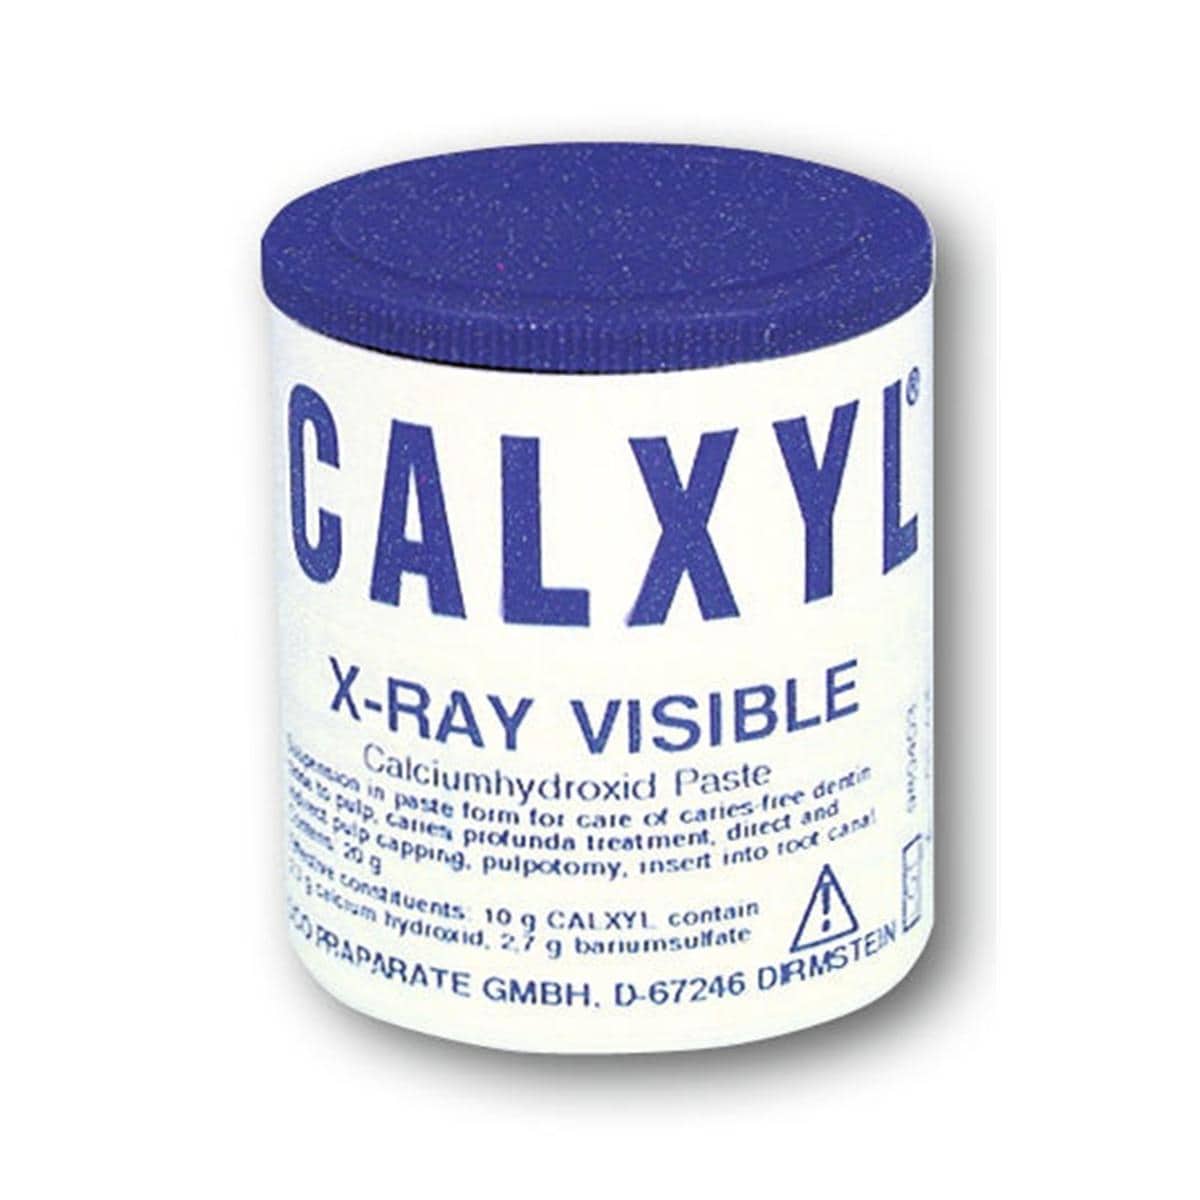 CALXYL - Blauw - rntgenzichtbaar